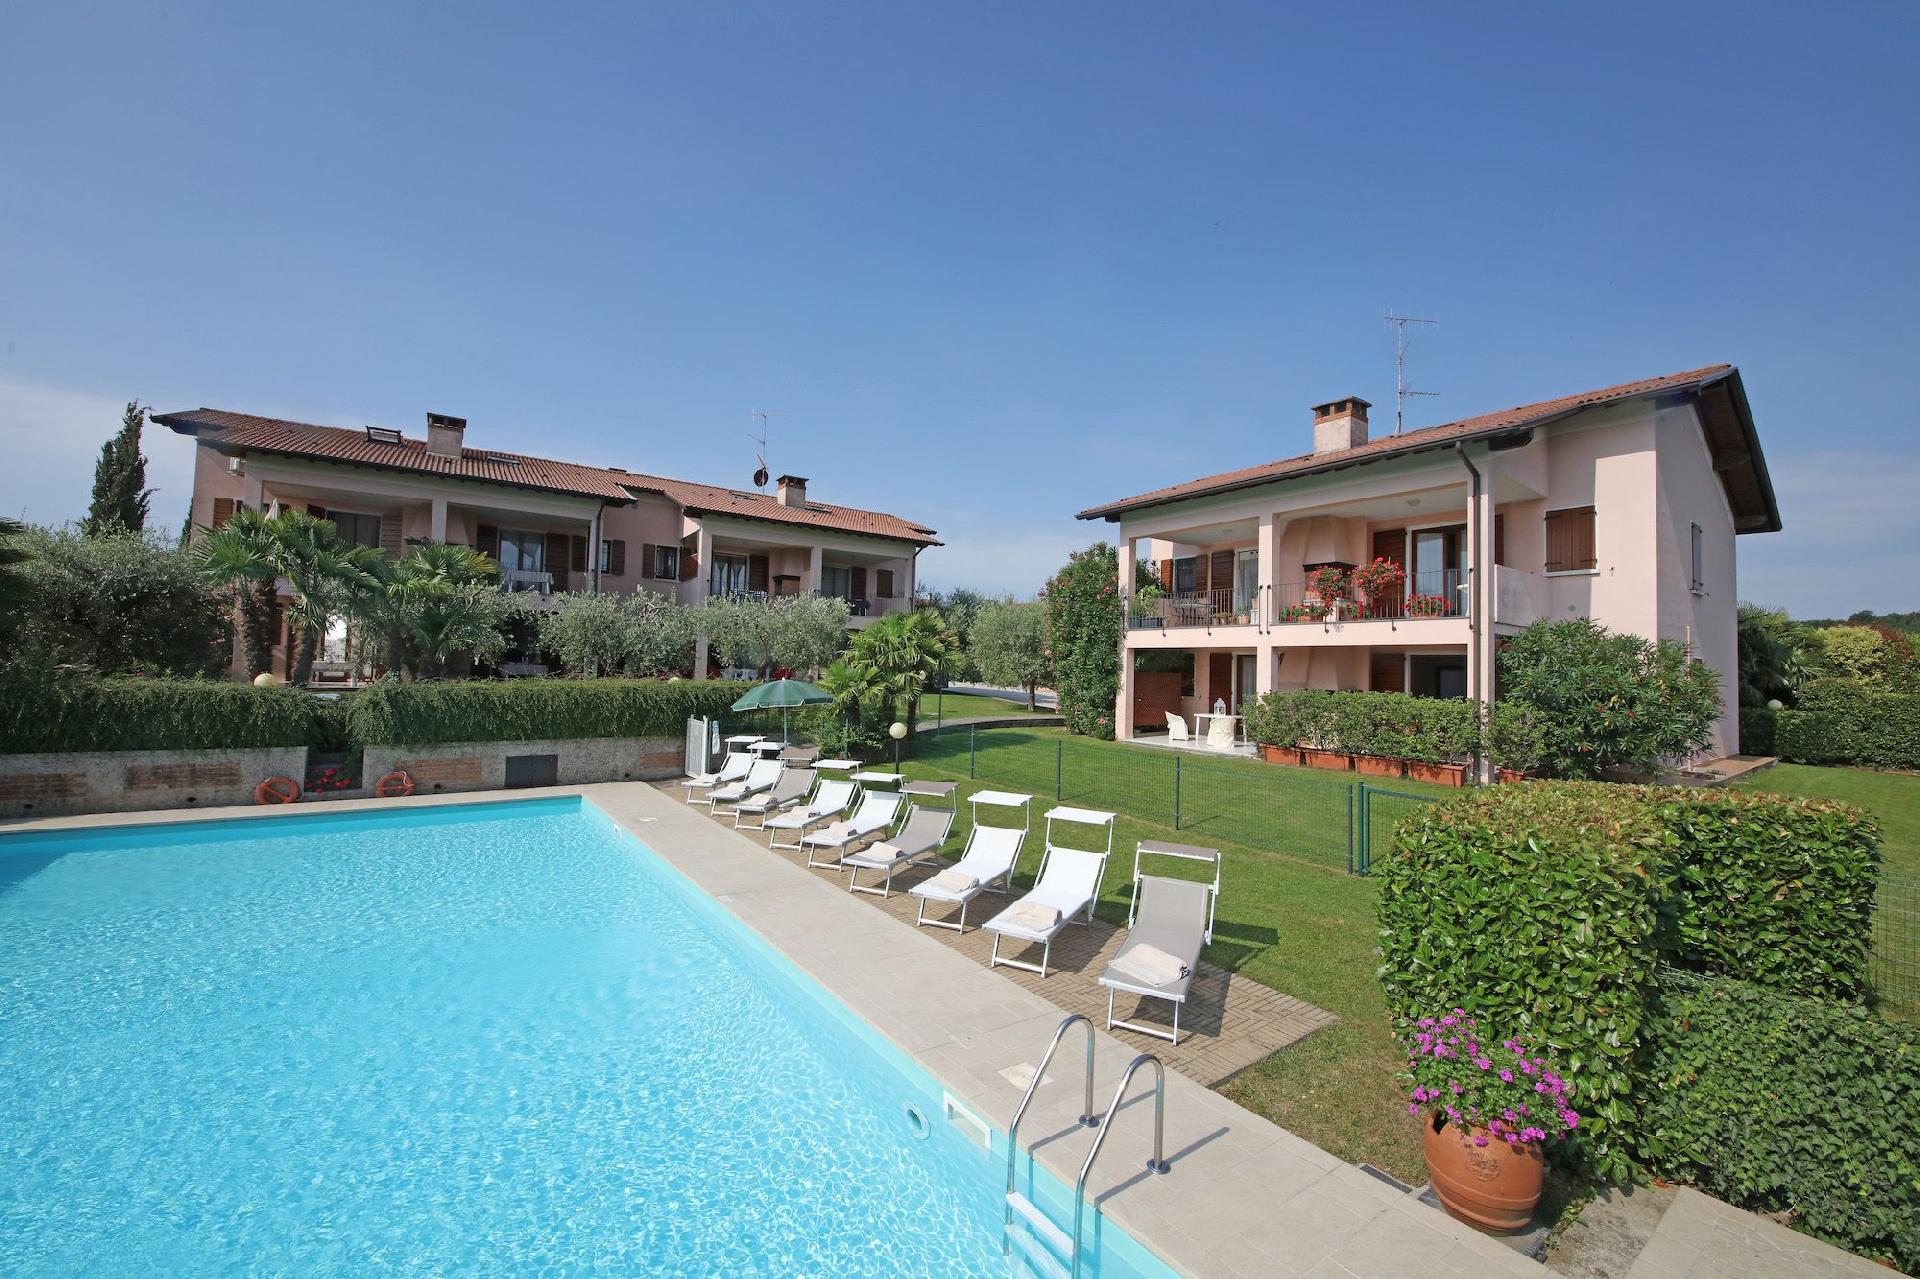 Appartement in Solarolo mit Grill, Pool und Terras   Gardasee - Lago di Garda